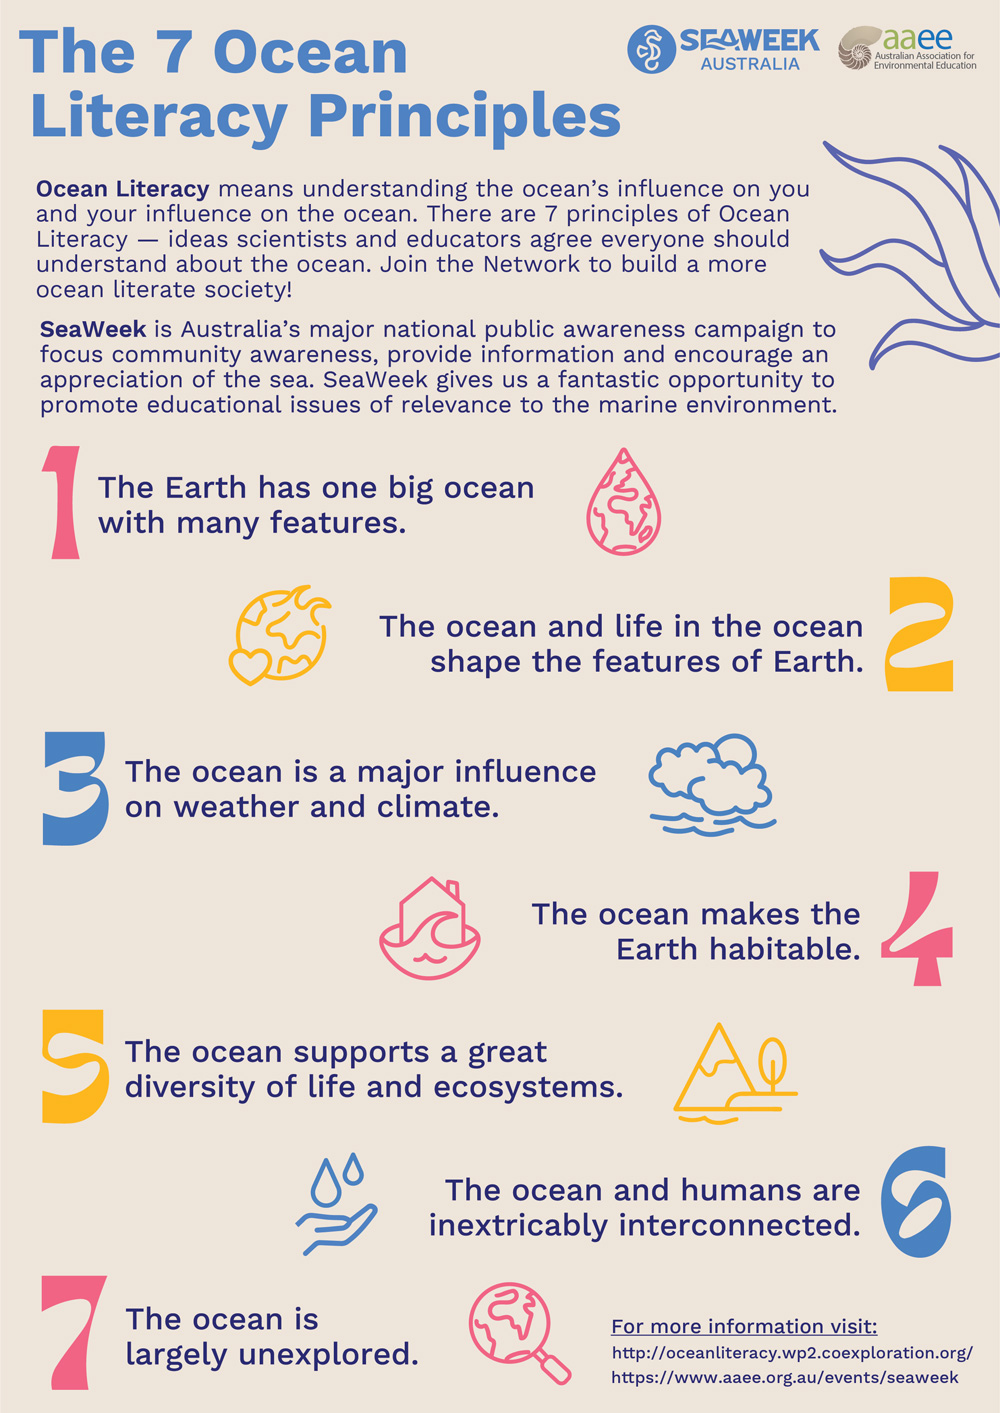 The 7 Ocean Literacy Principles poster